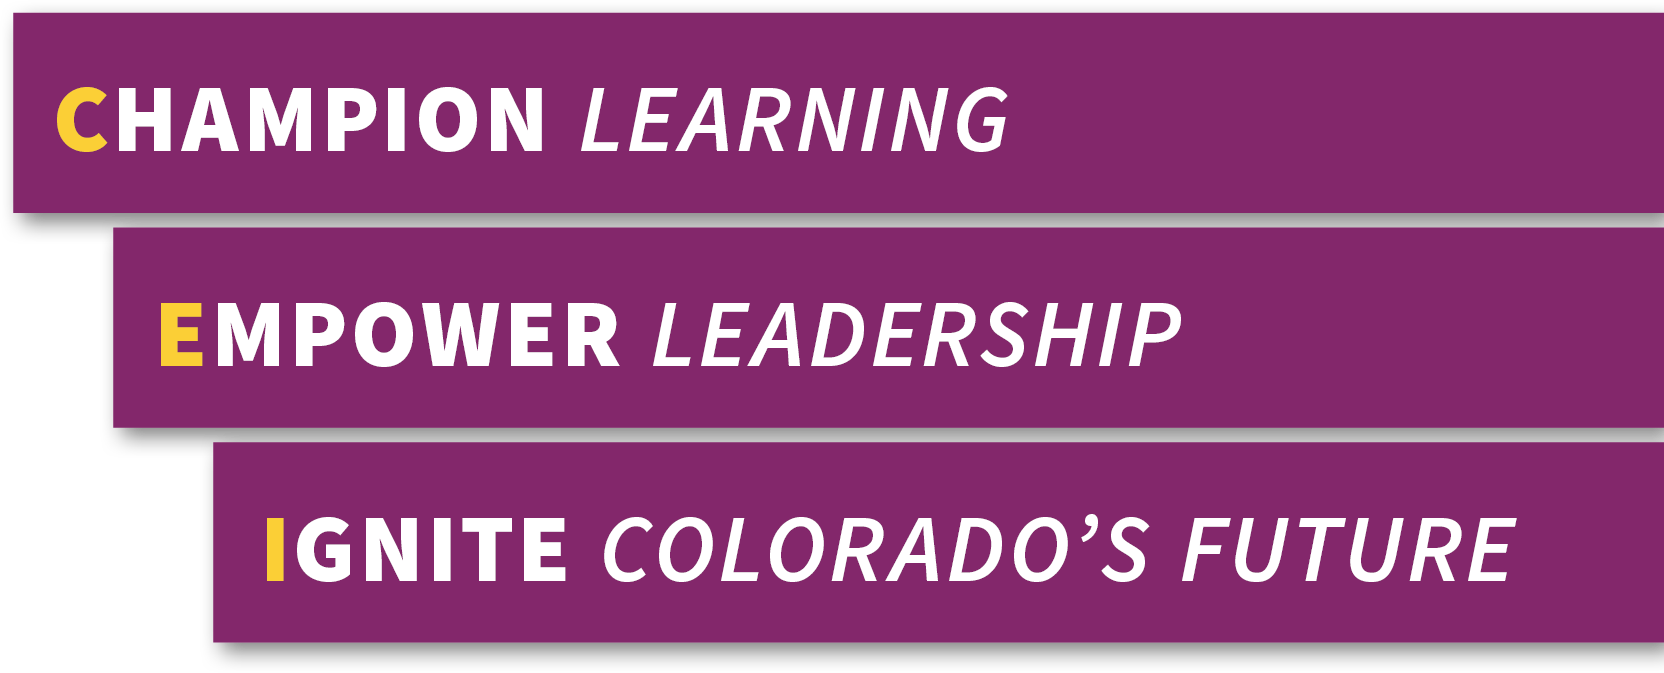 Champion Learning. Empower Leadership.  Ignite Colorado’s Future.